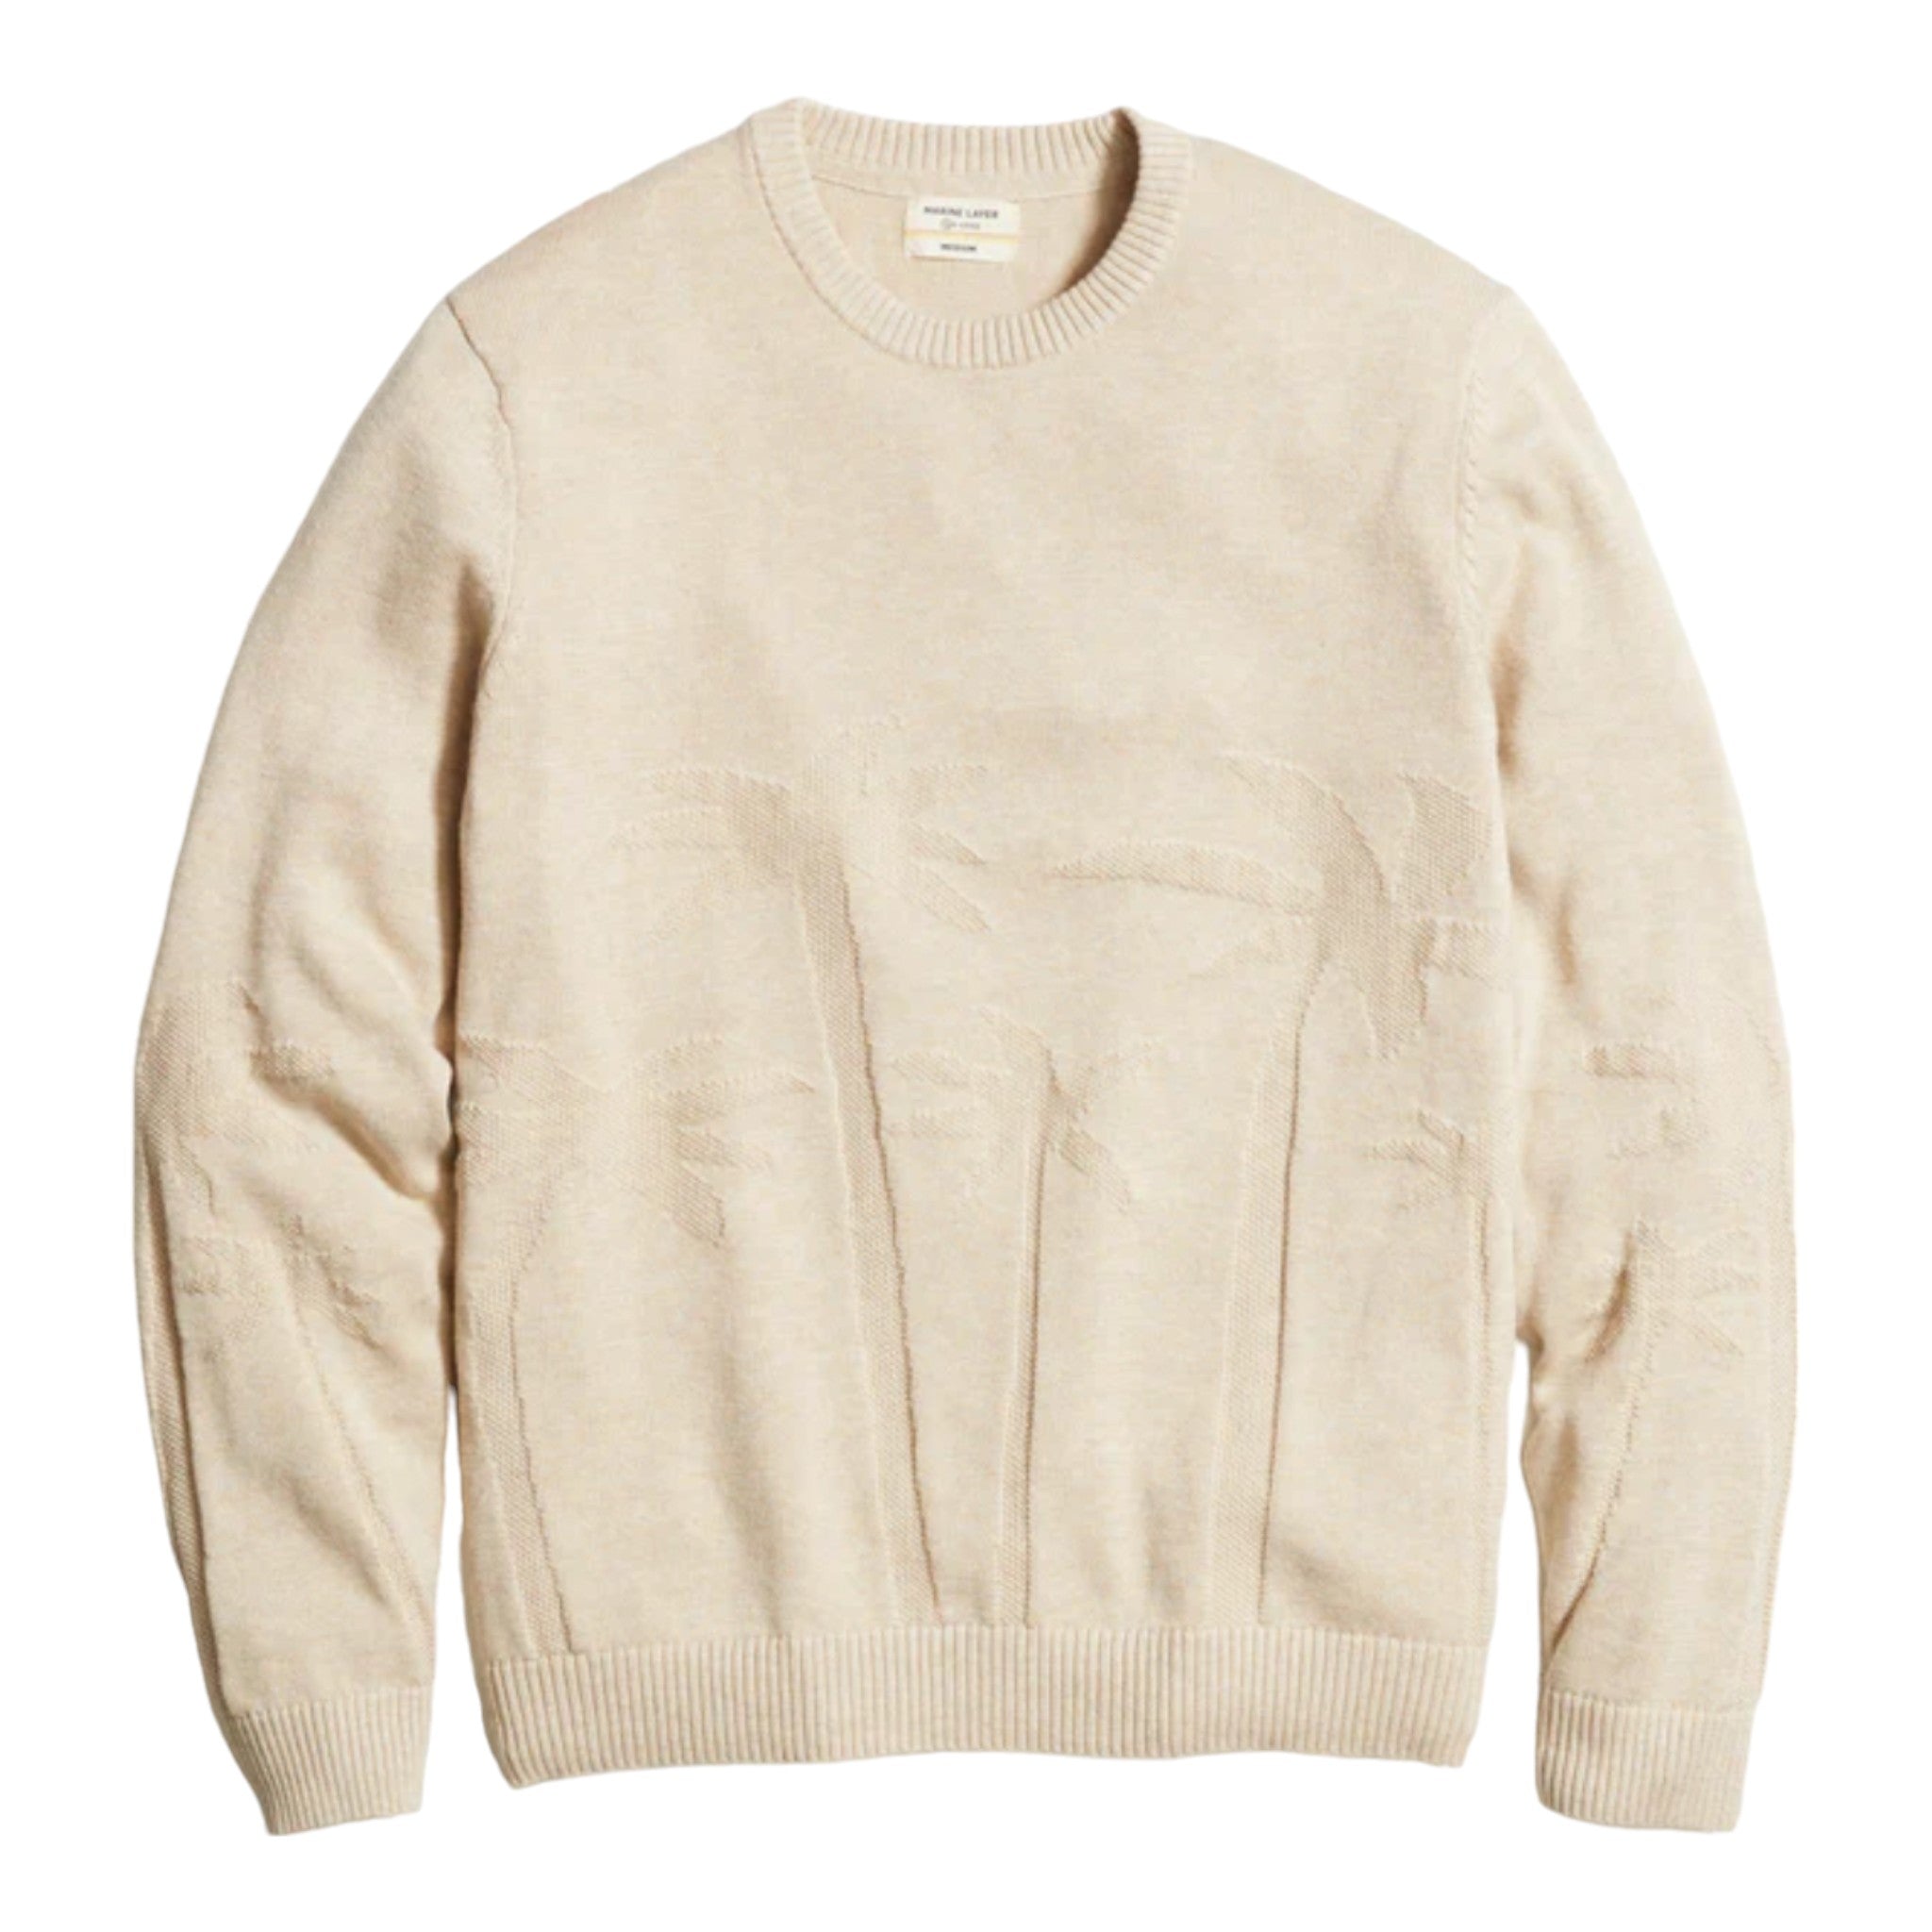 Marine Layer - Scenic Crewneck Sweater - Oatmeal